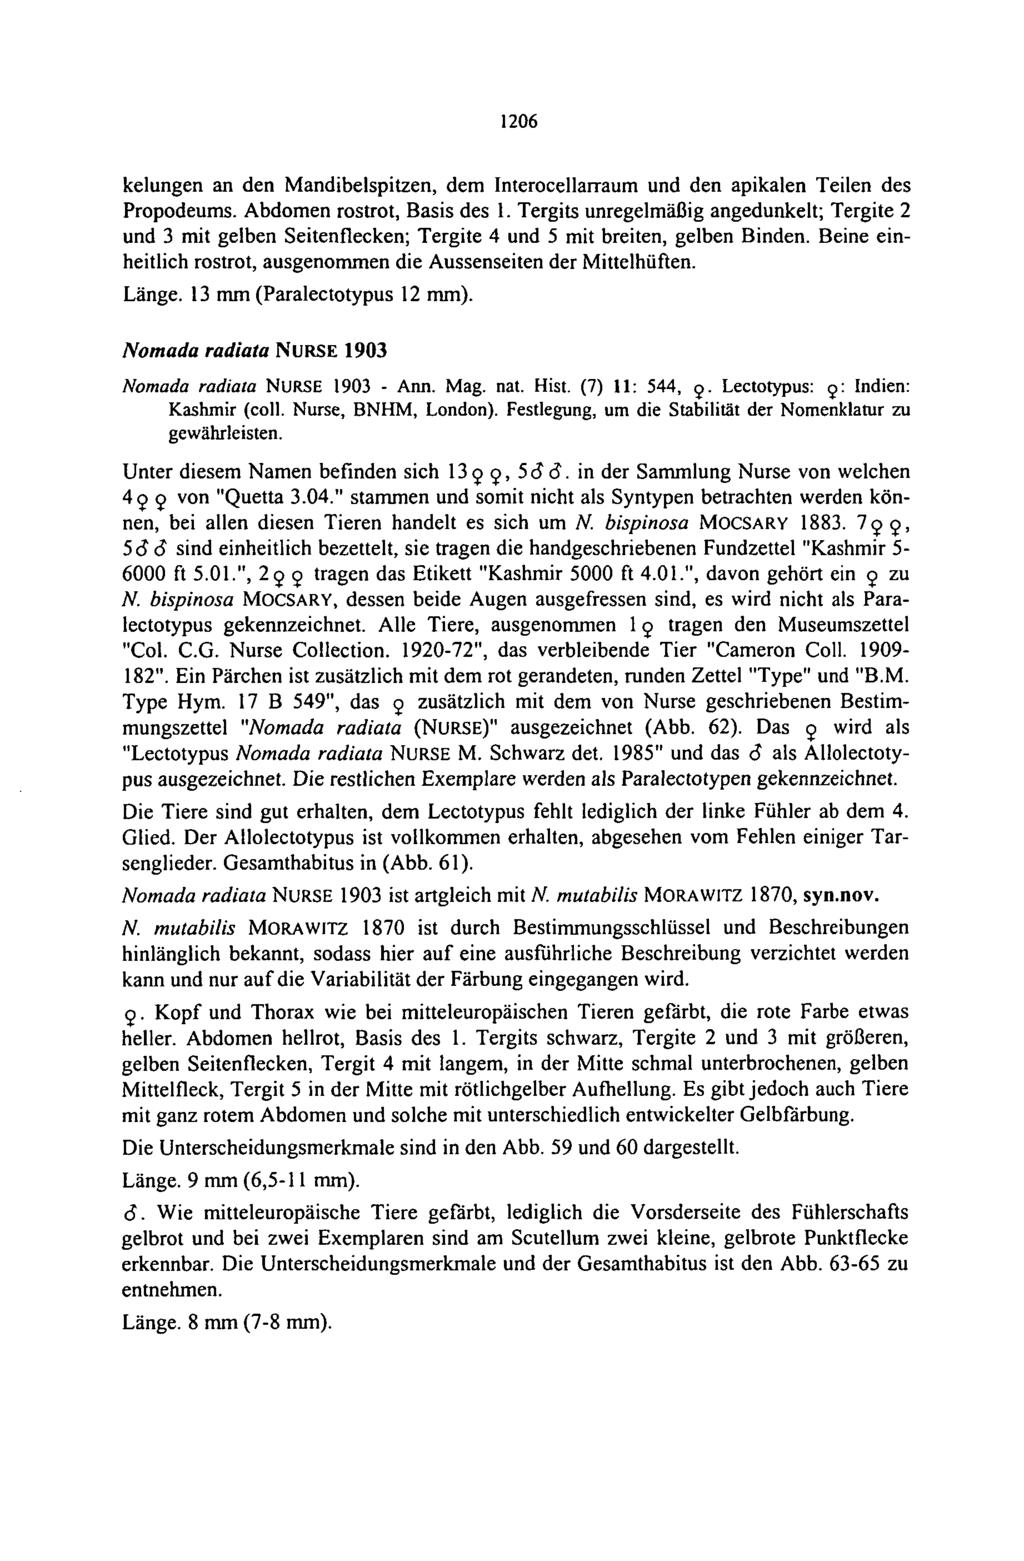 1206 kelungen an den Mandibelspitzen, dem Interocellarraum und den apikalen Teilen des Propodeums. Abdomen rostrot, Basis des 1.